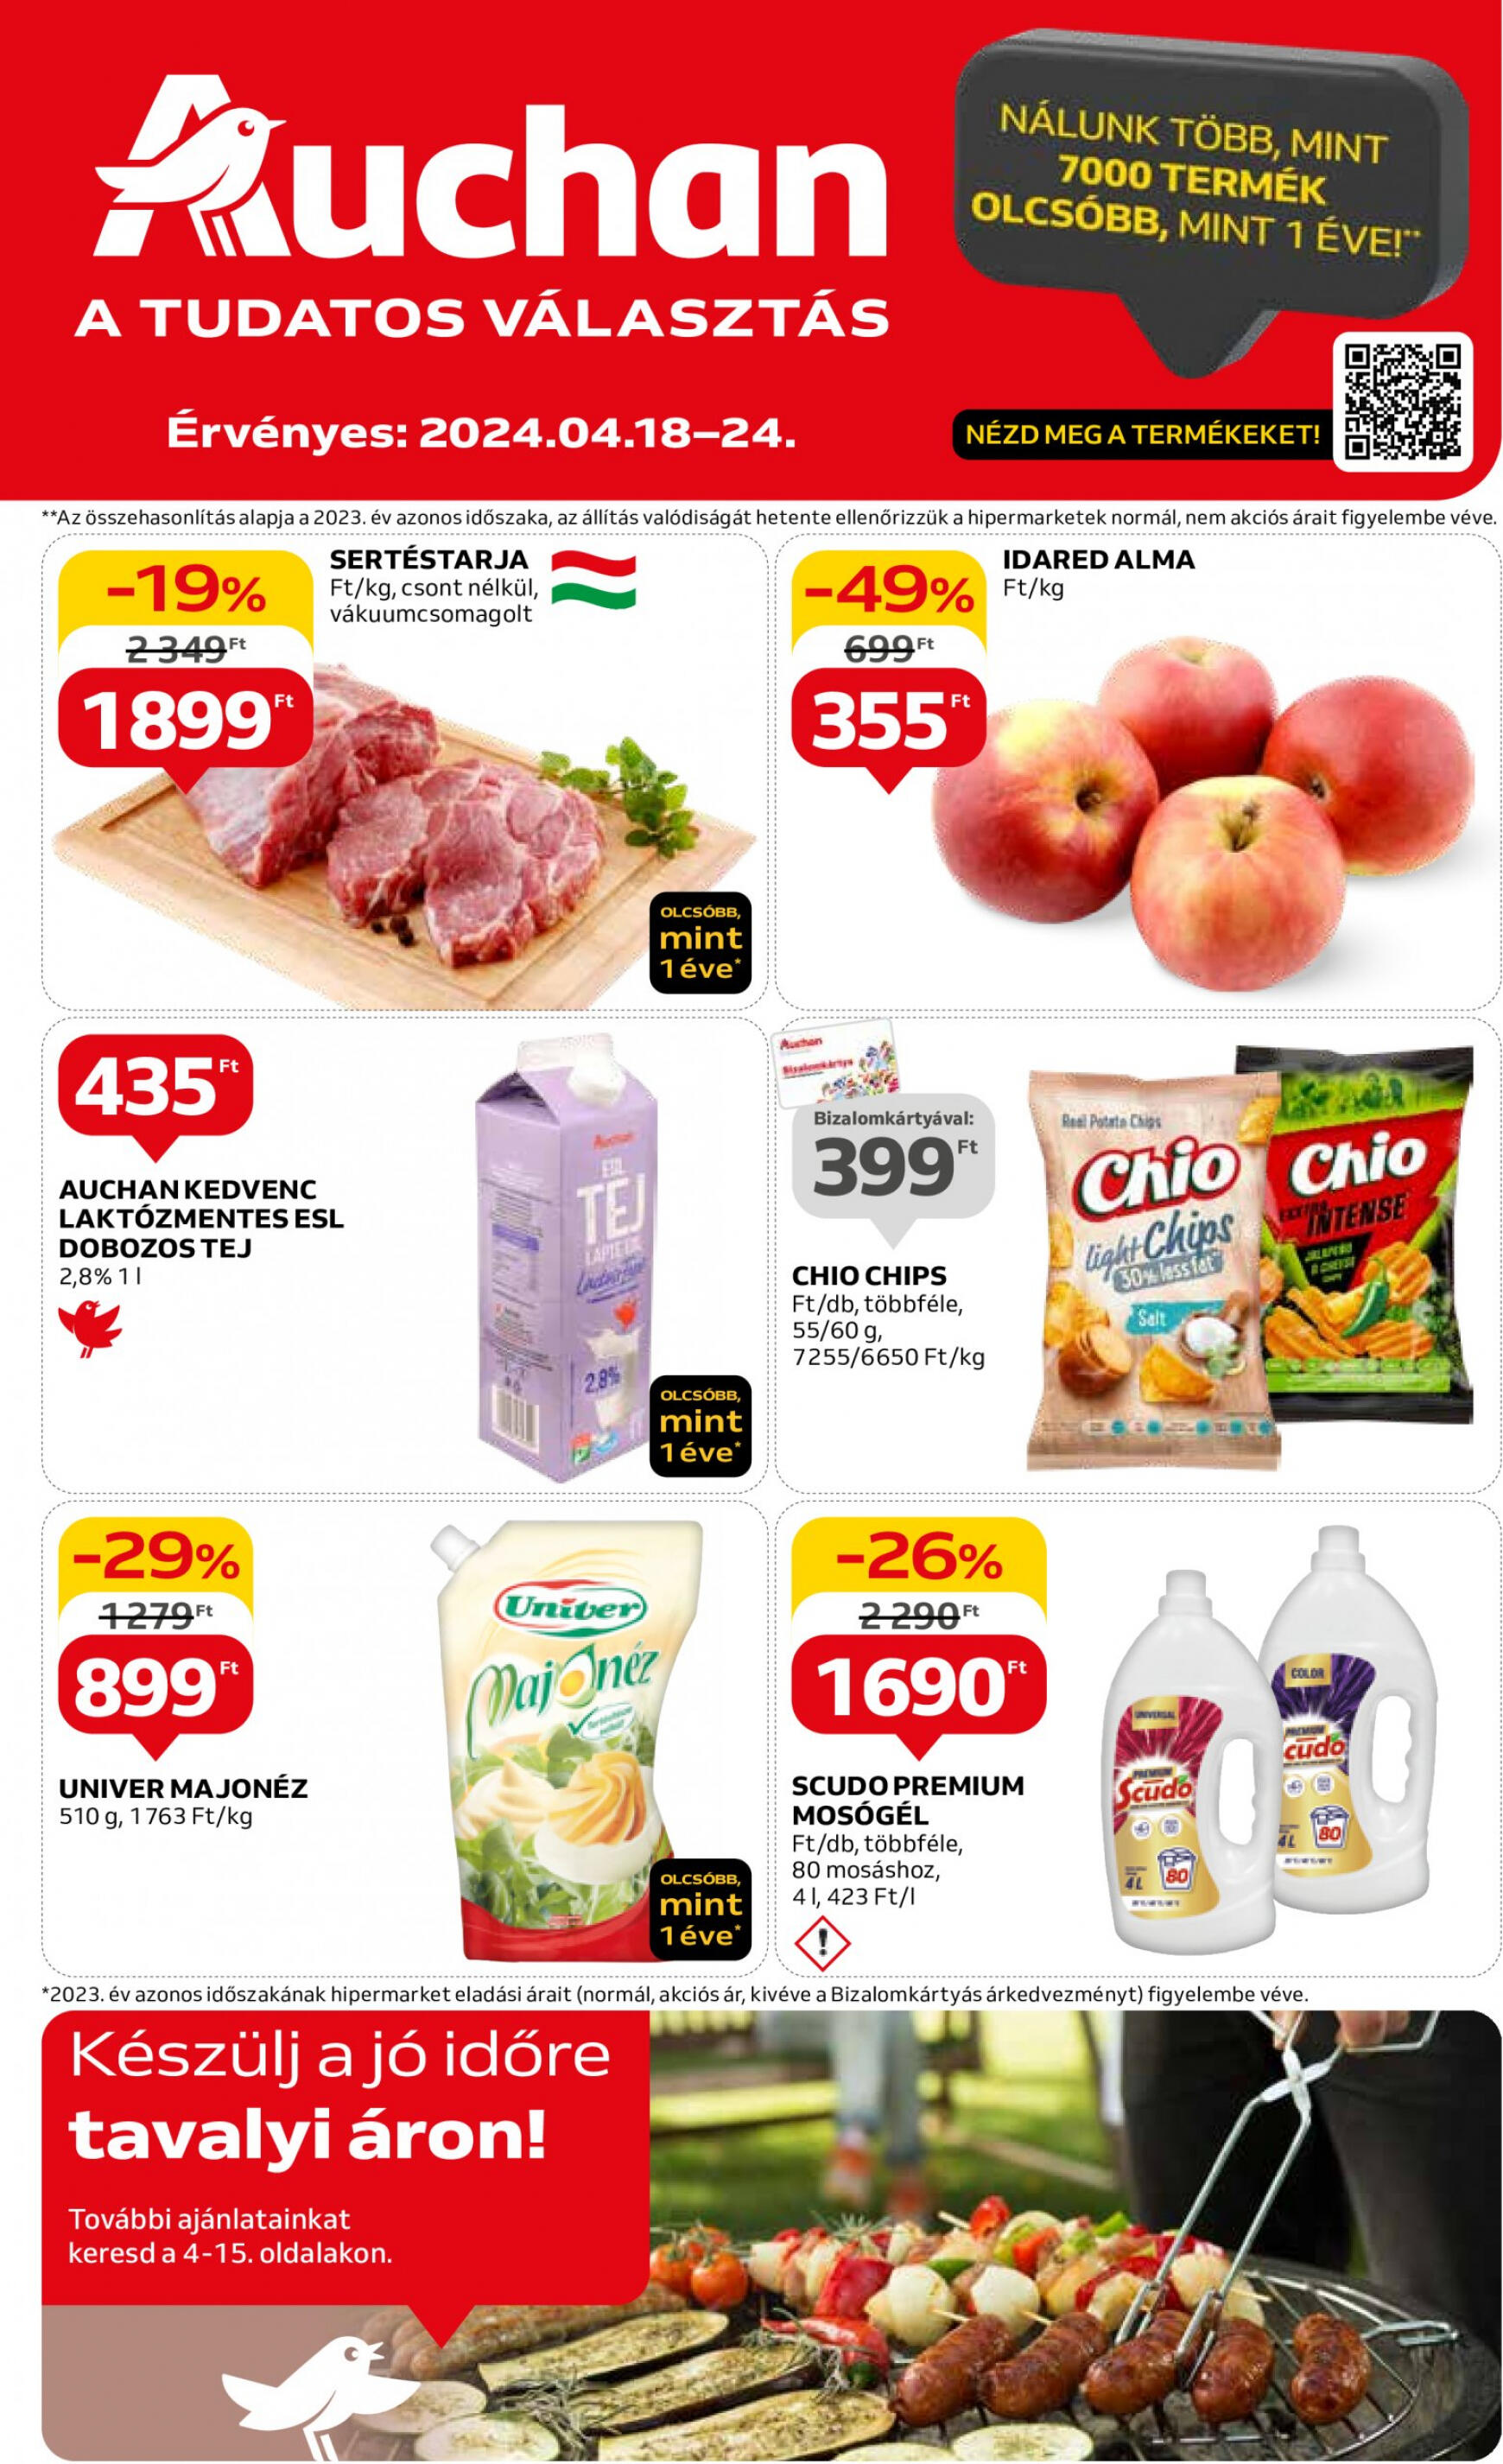 auchan - Aktuális újság Auchan 04.18. - 04.24. - page: 1